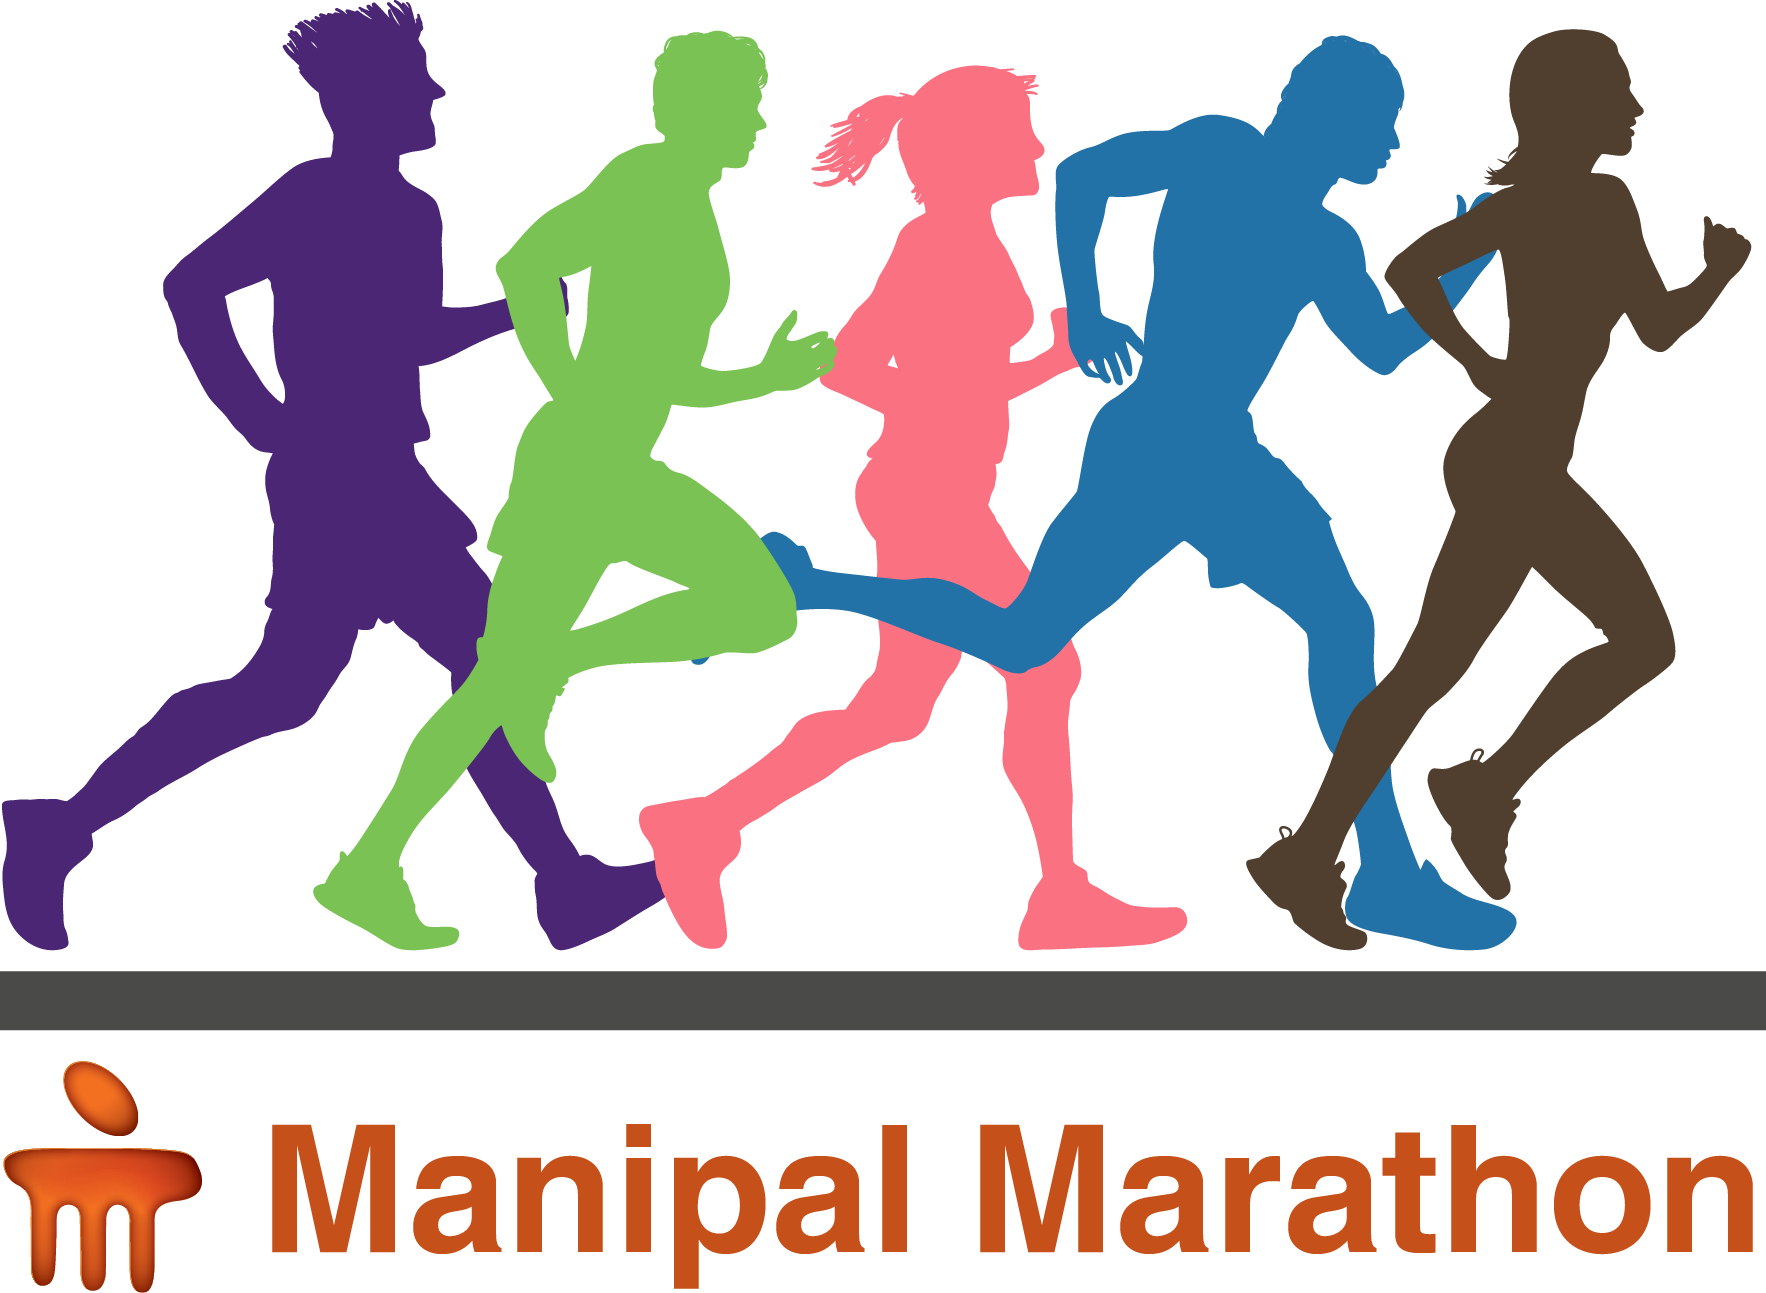 Runner clipart marathon. Manipal 